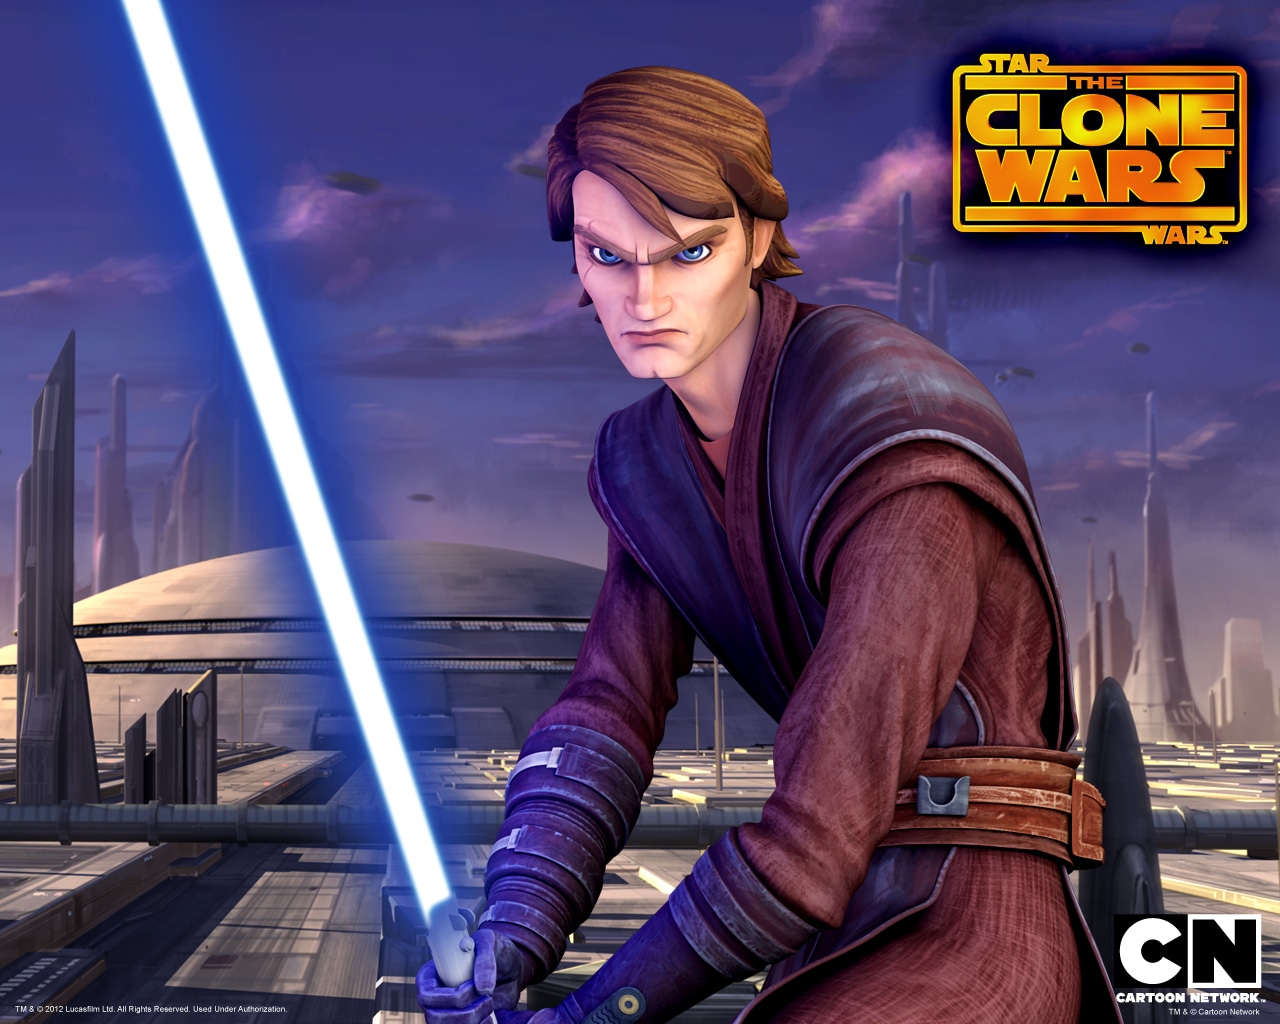 Star Wars Clone Wars Adventures Download